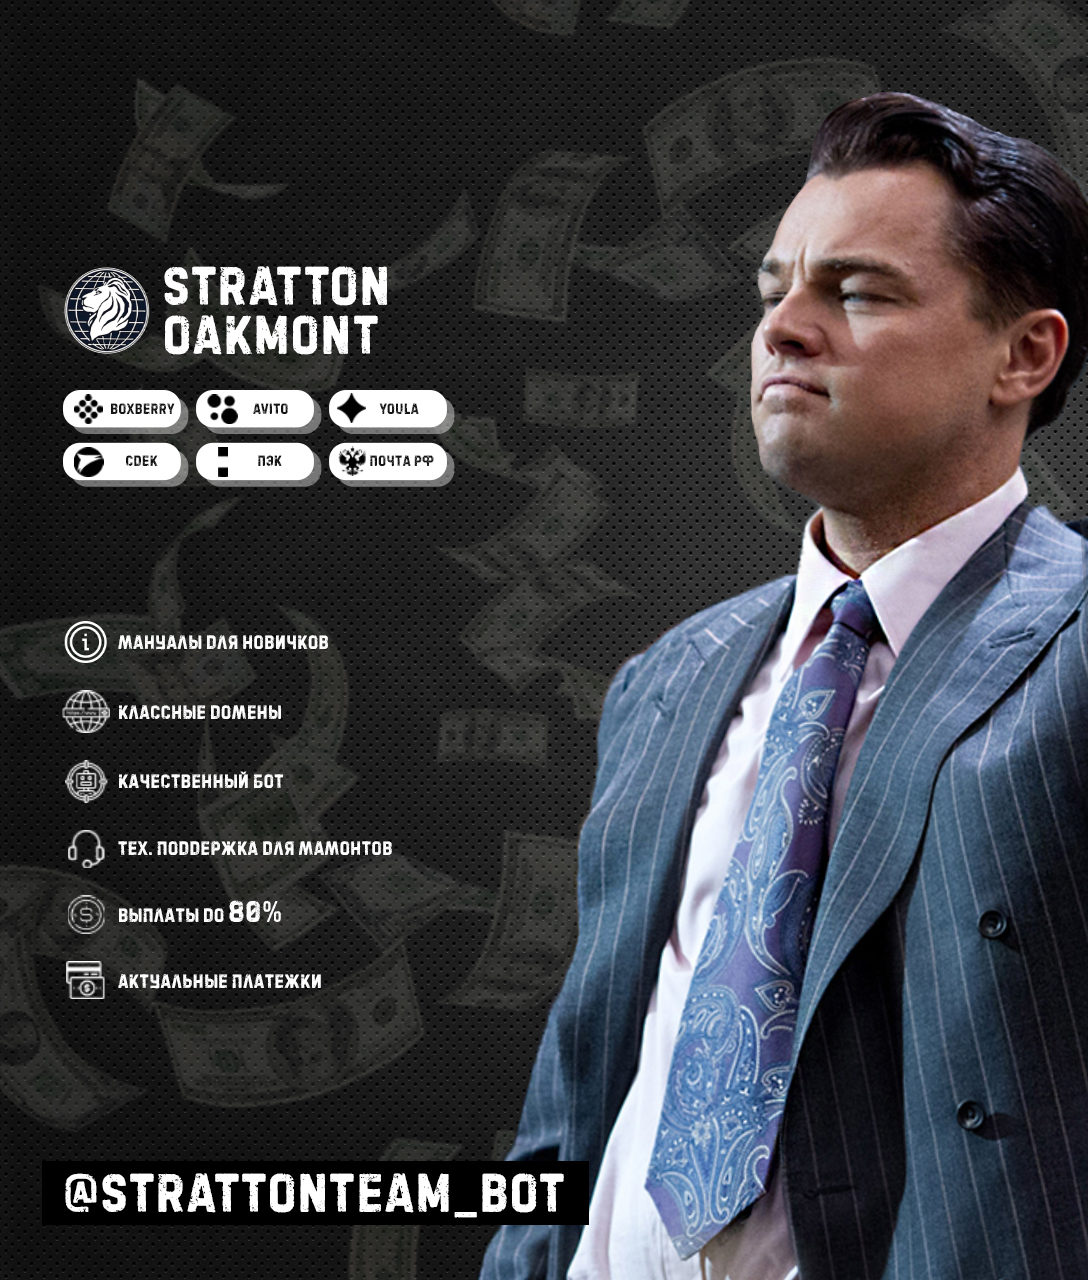 Реклама Стреттон окмонд2.jpg